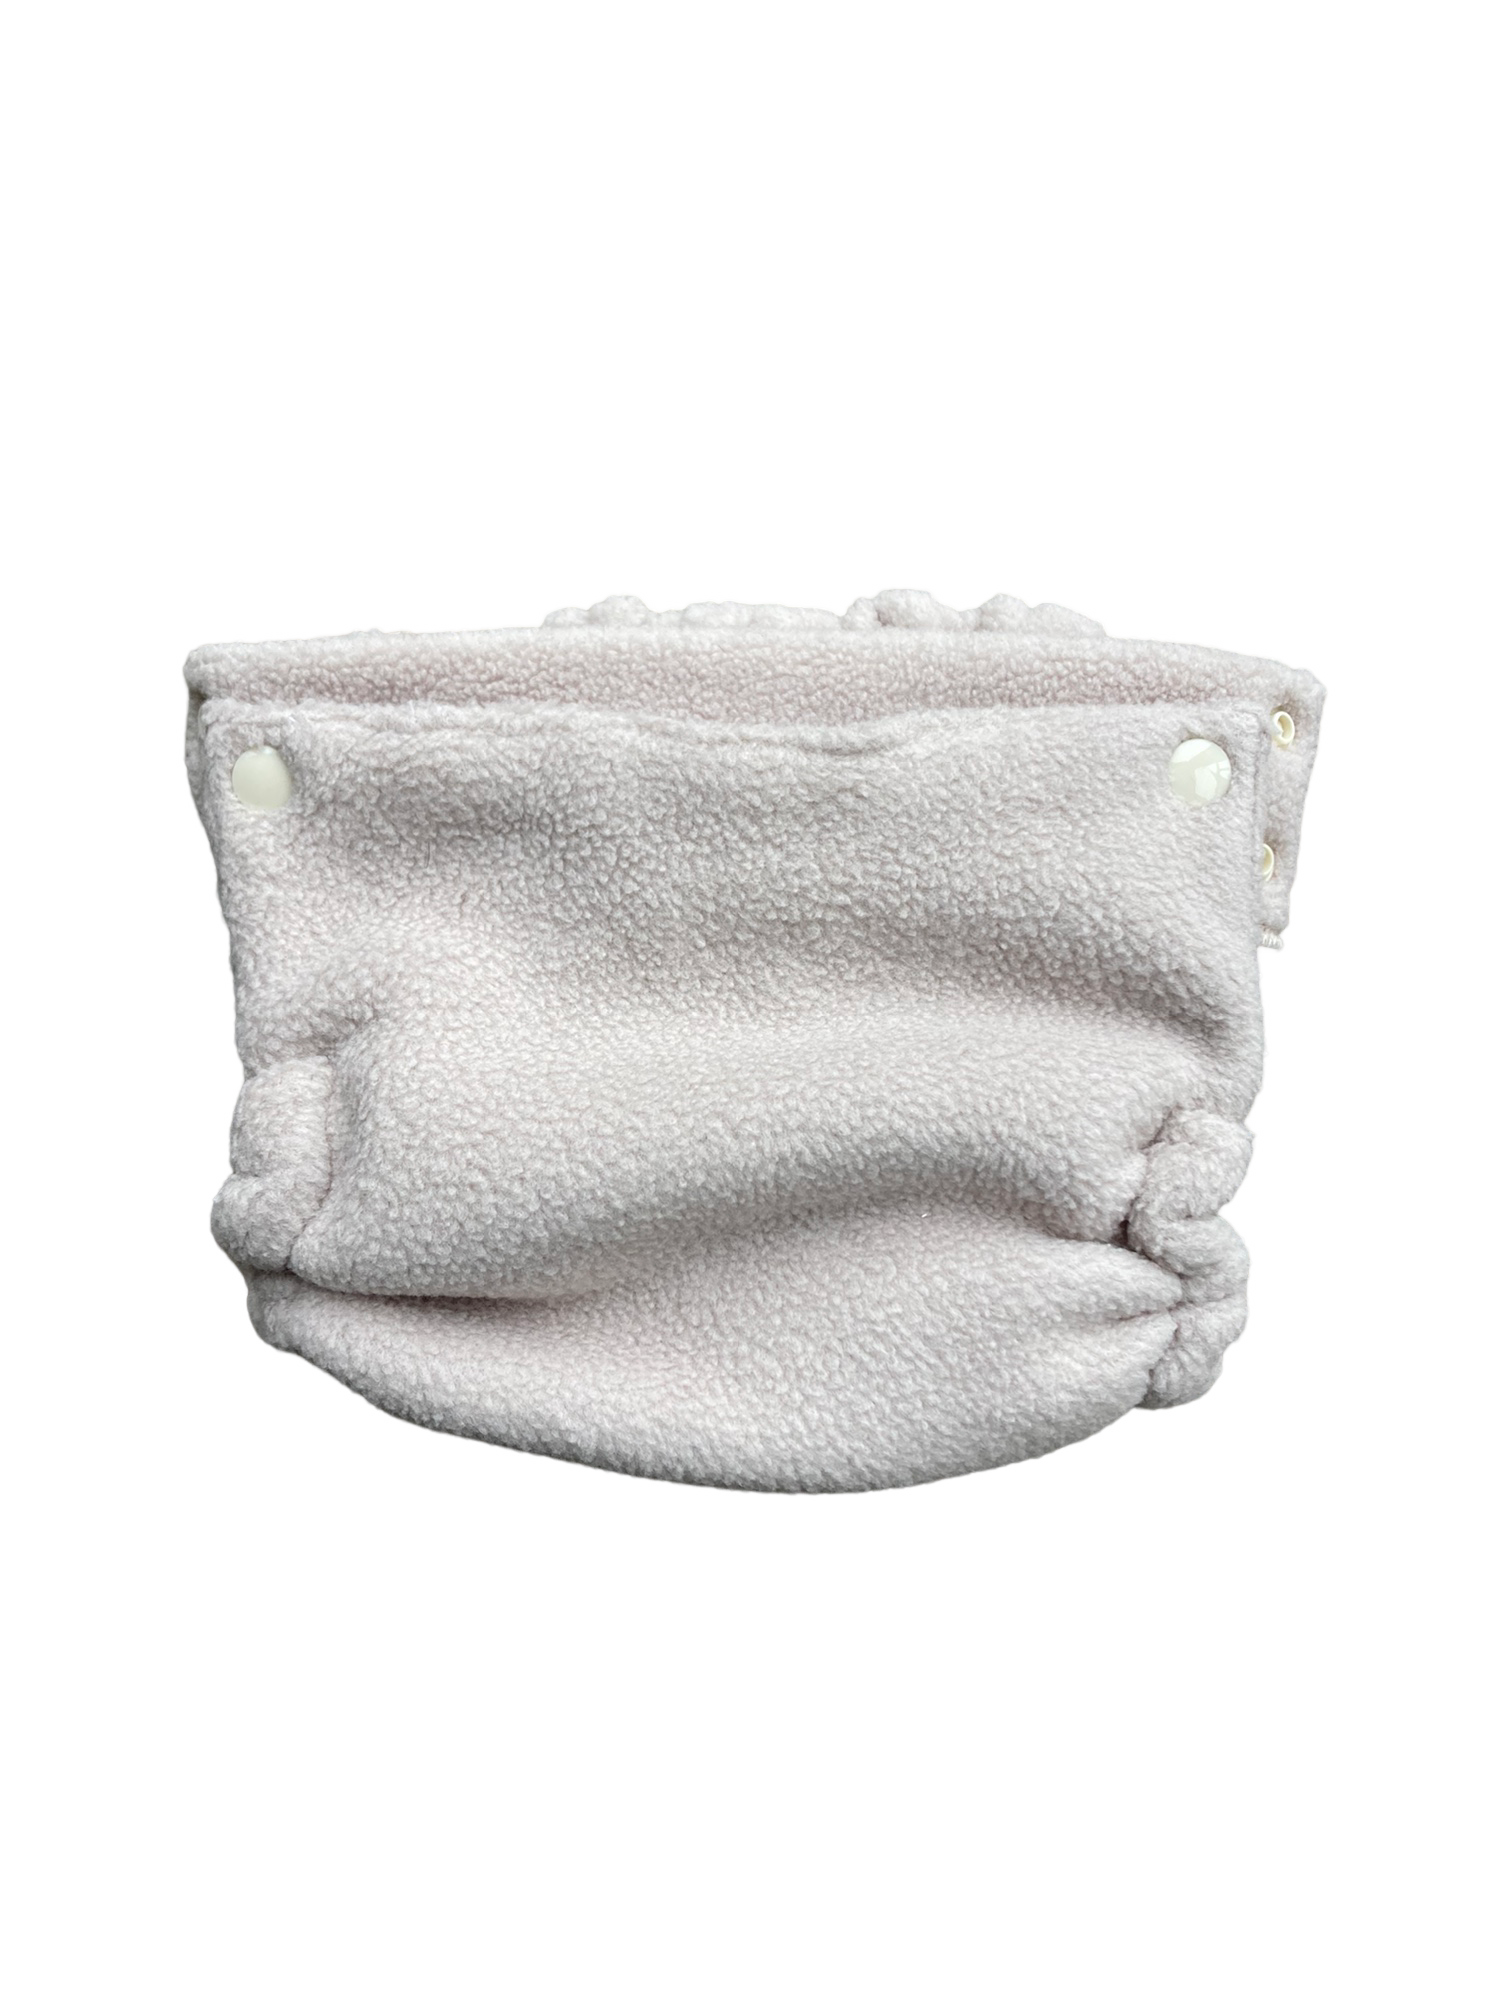 Latte Cream Fleece All-In-Two Flappy-Nappy Diaper Cover